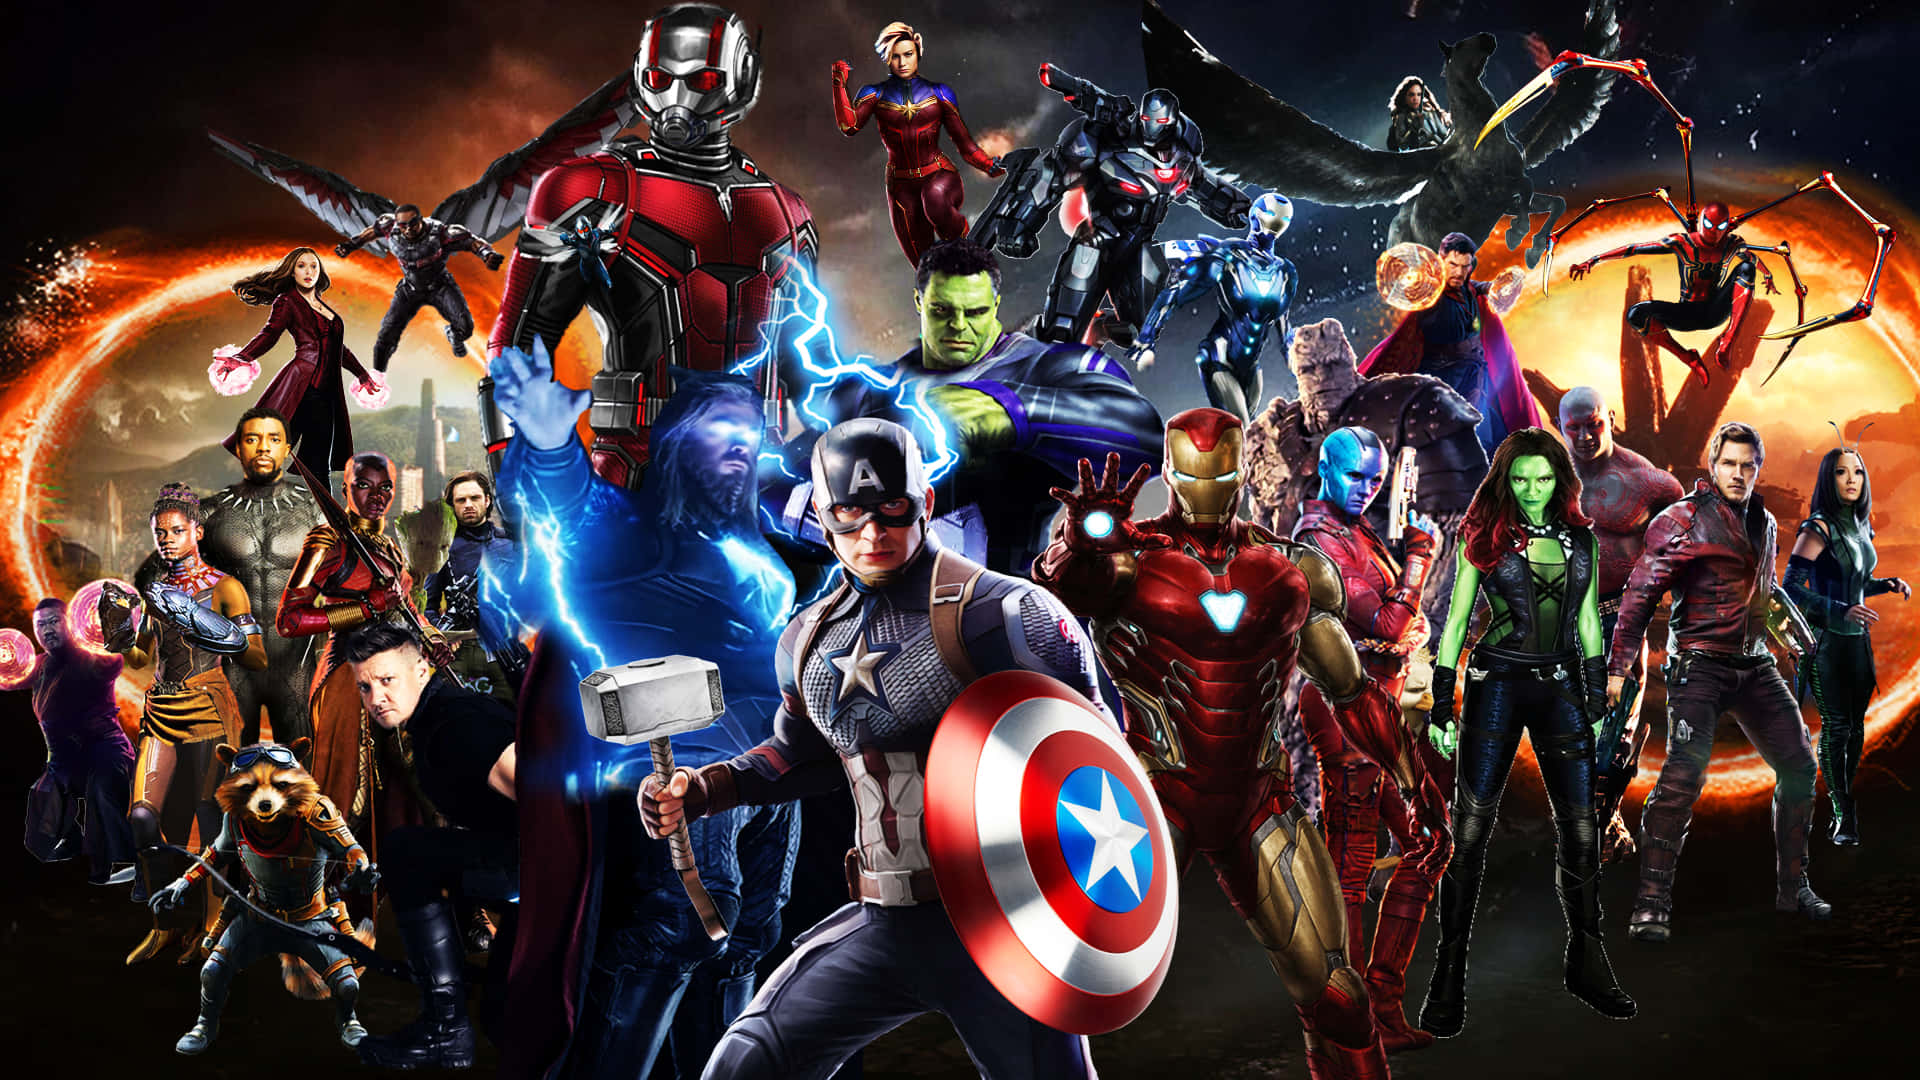 The Mighty Avengers Assemble in Avengers Endgame